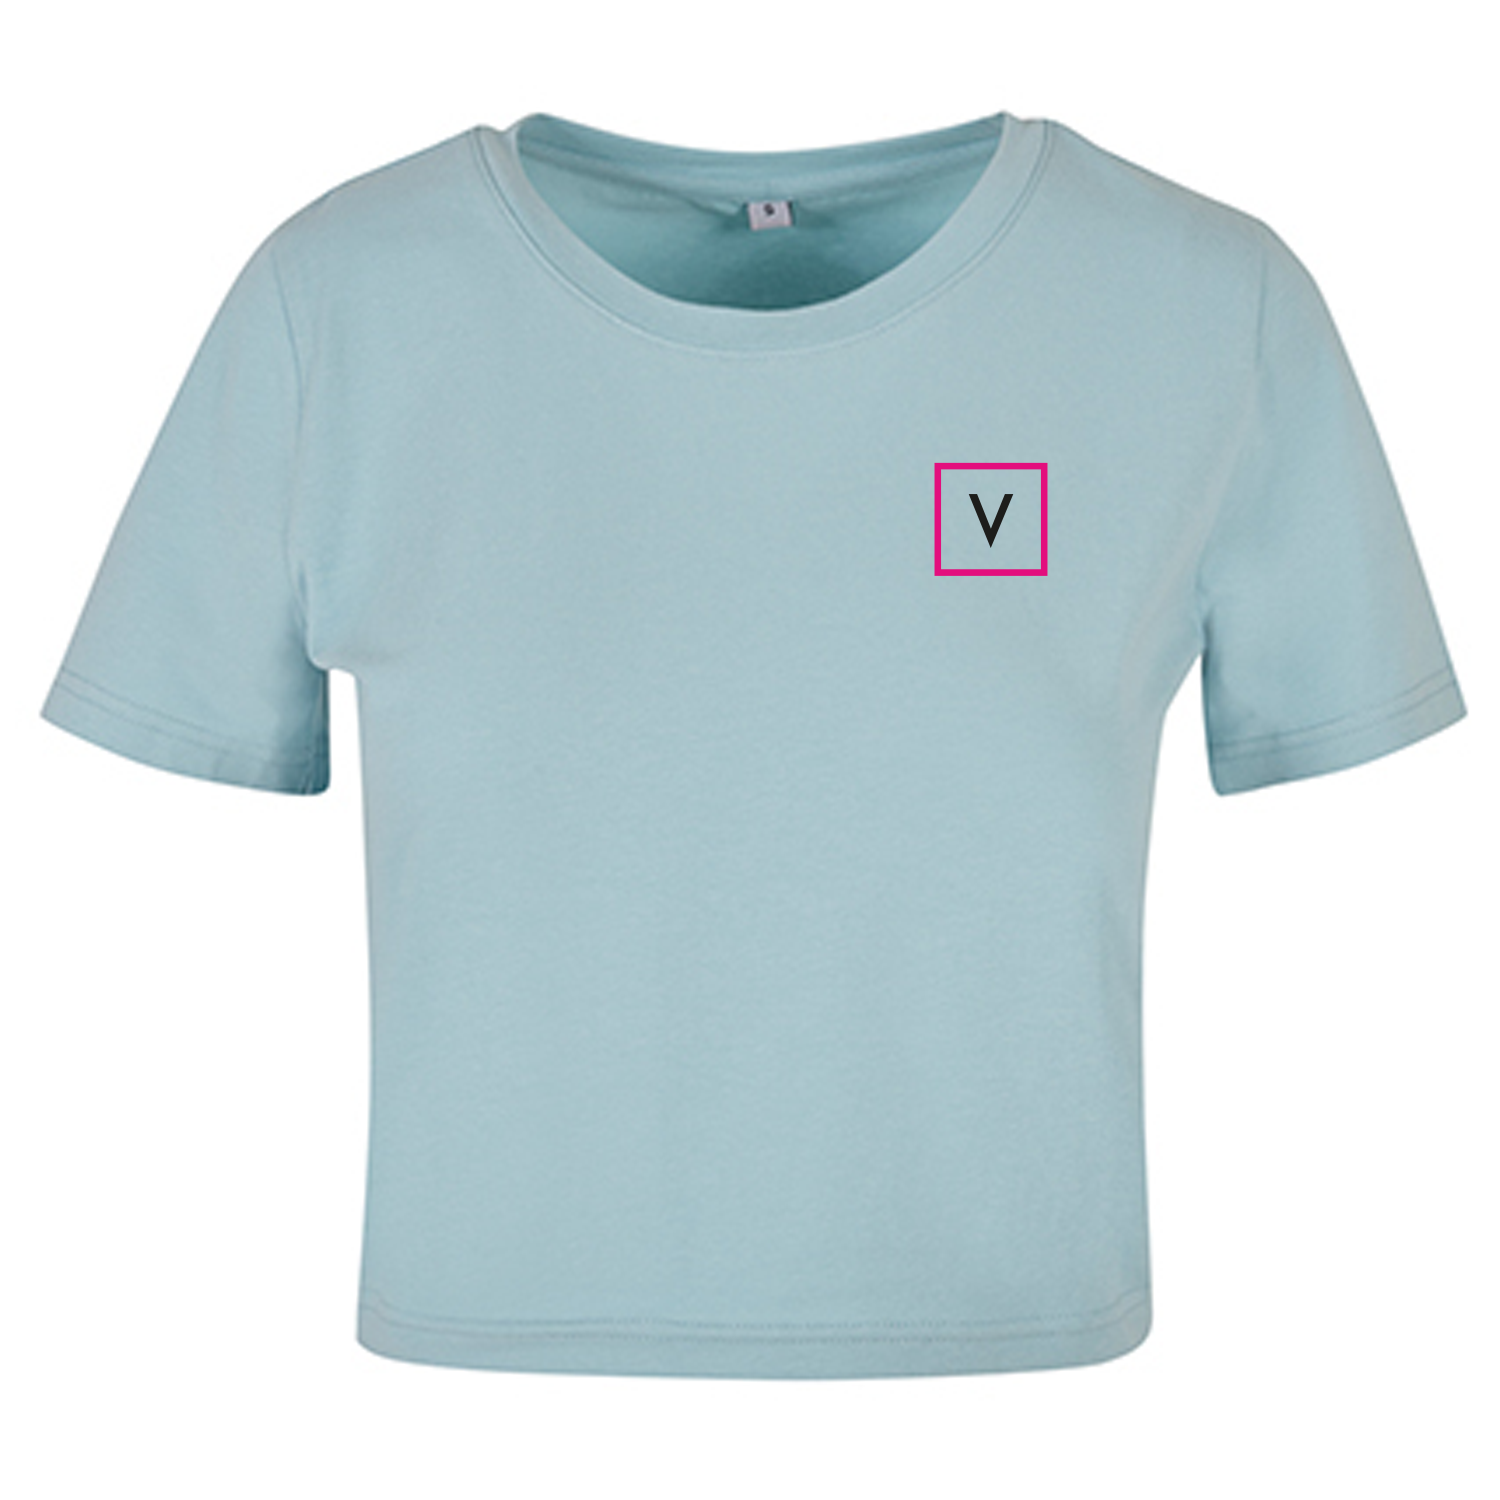 VENUS Girl's Cropped Top "V" - Ocean Blue/Schwarz/Pink